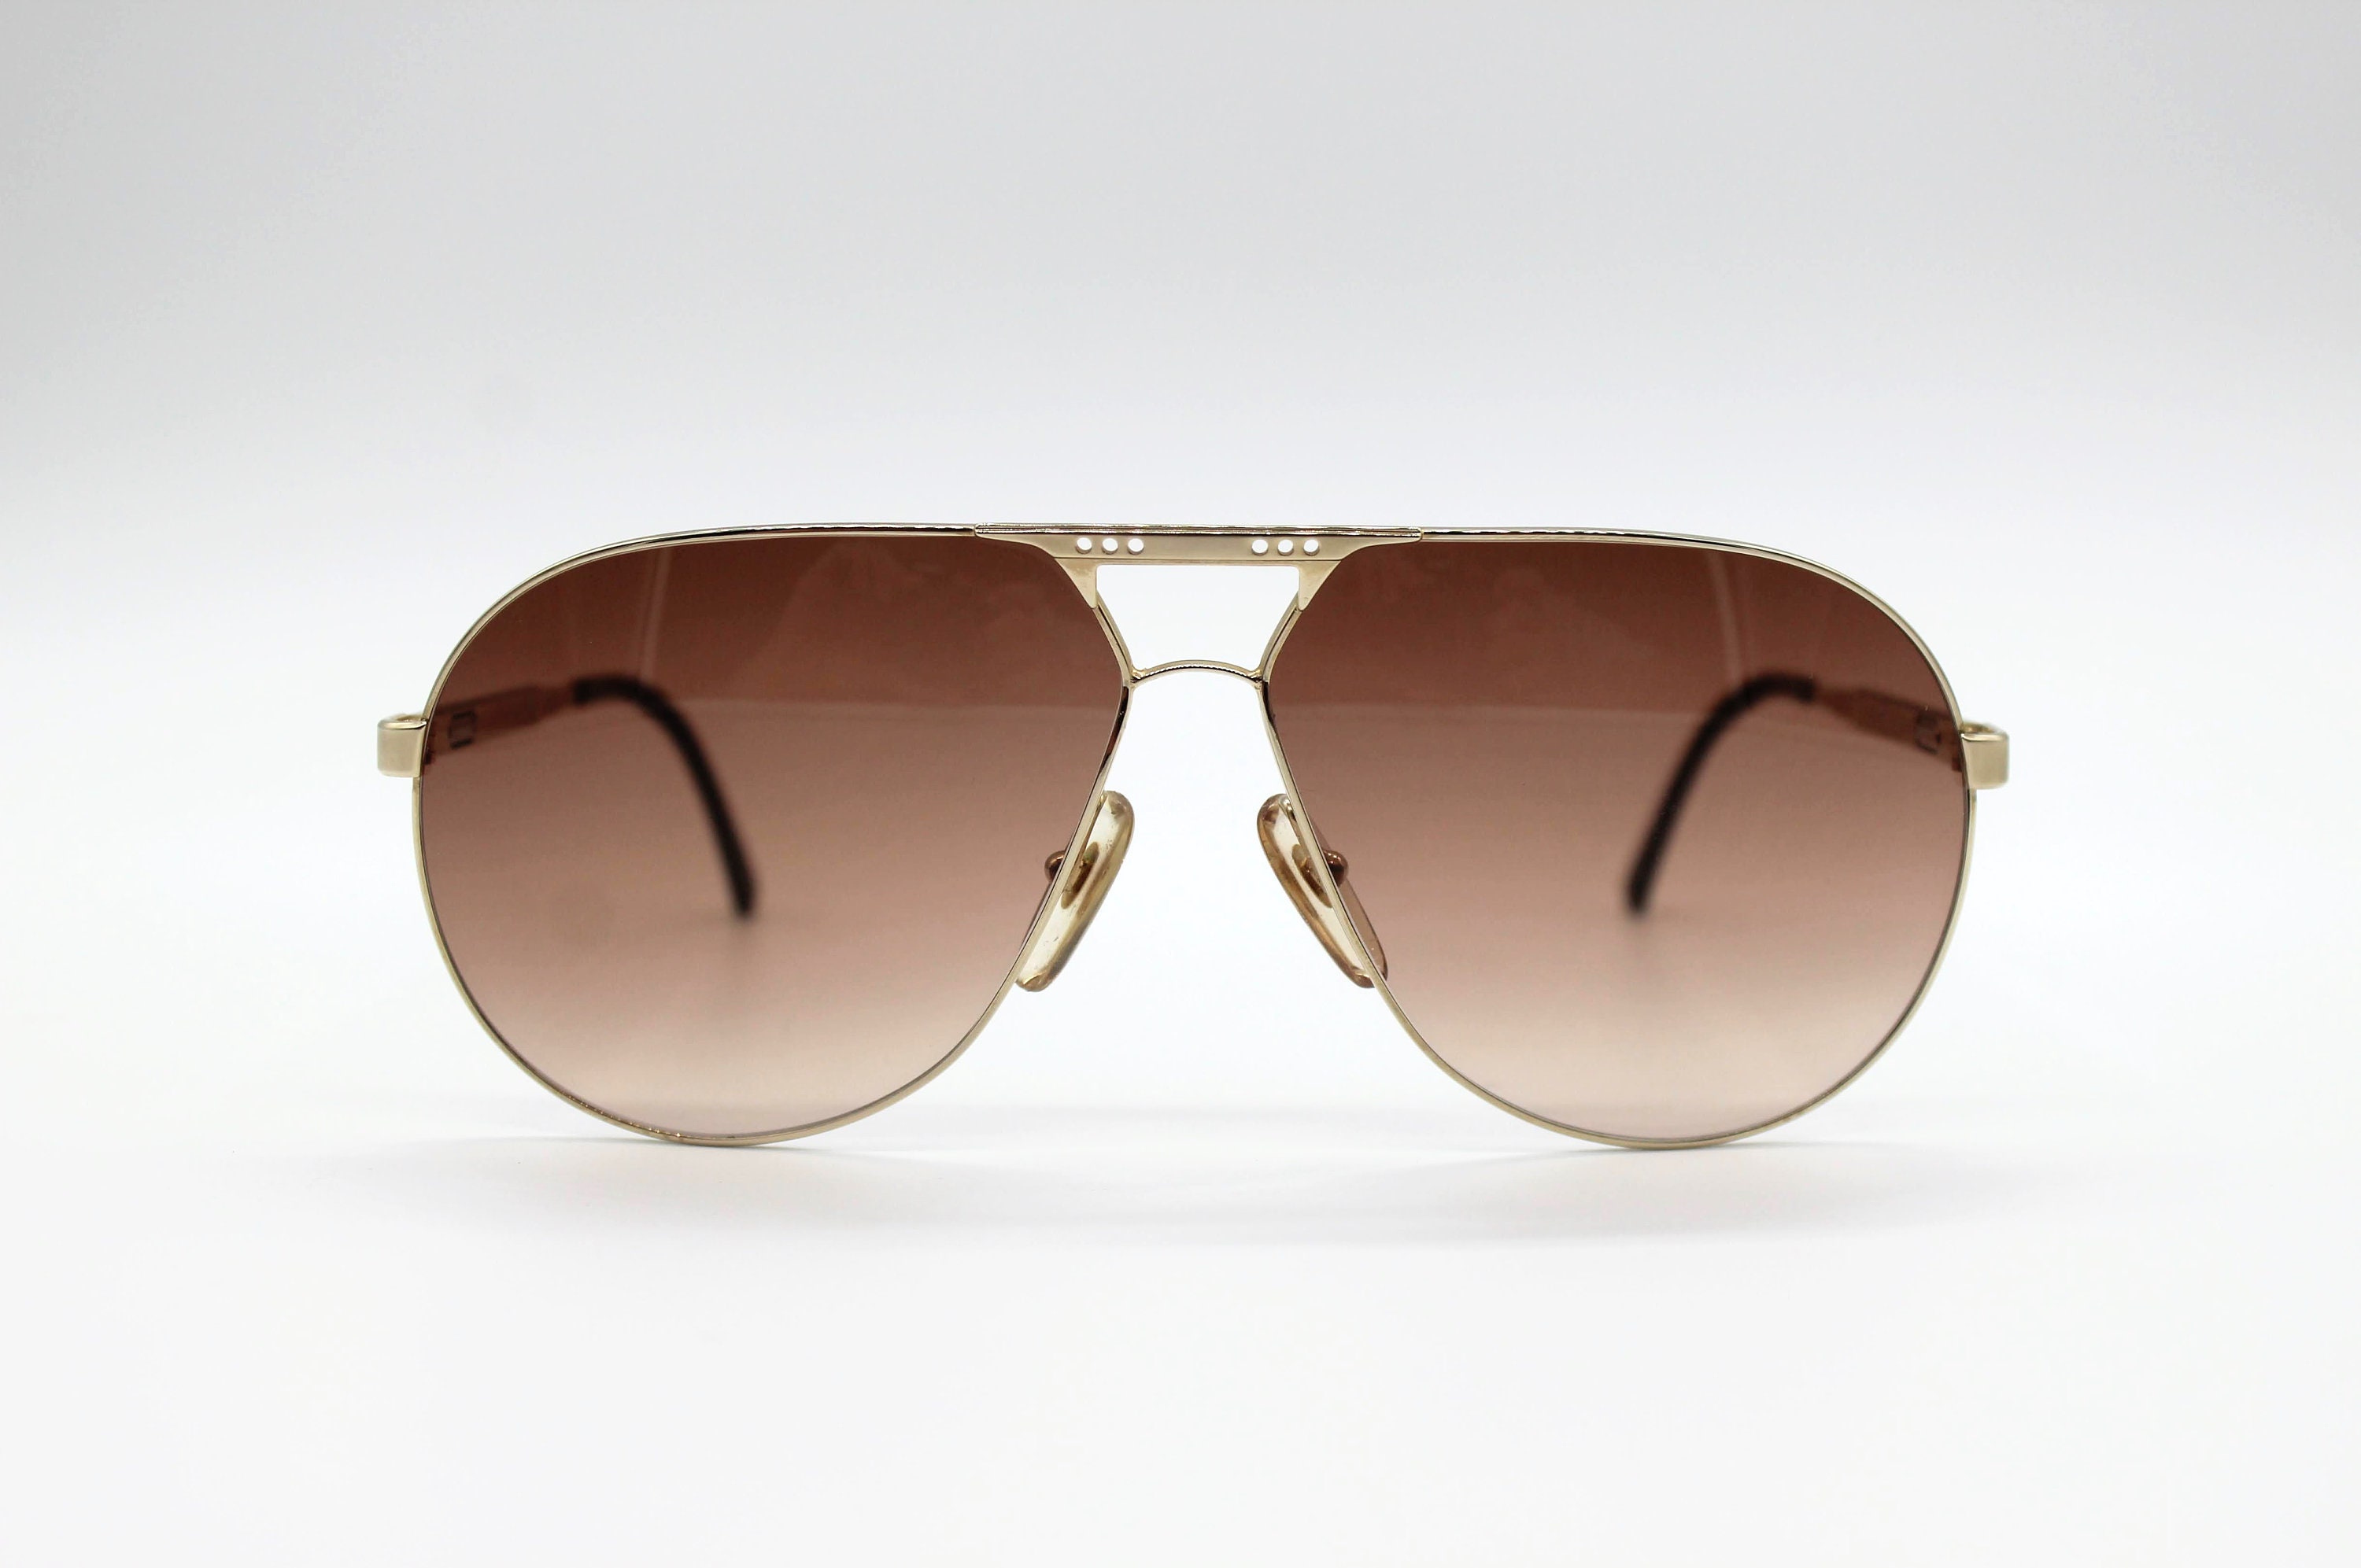 Vintage Sunglasses Carrera 5318 Vario by Optyl Aviator | Etsy